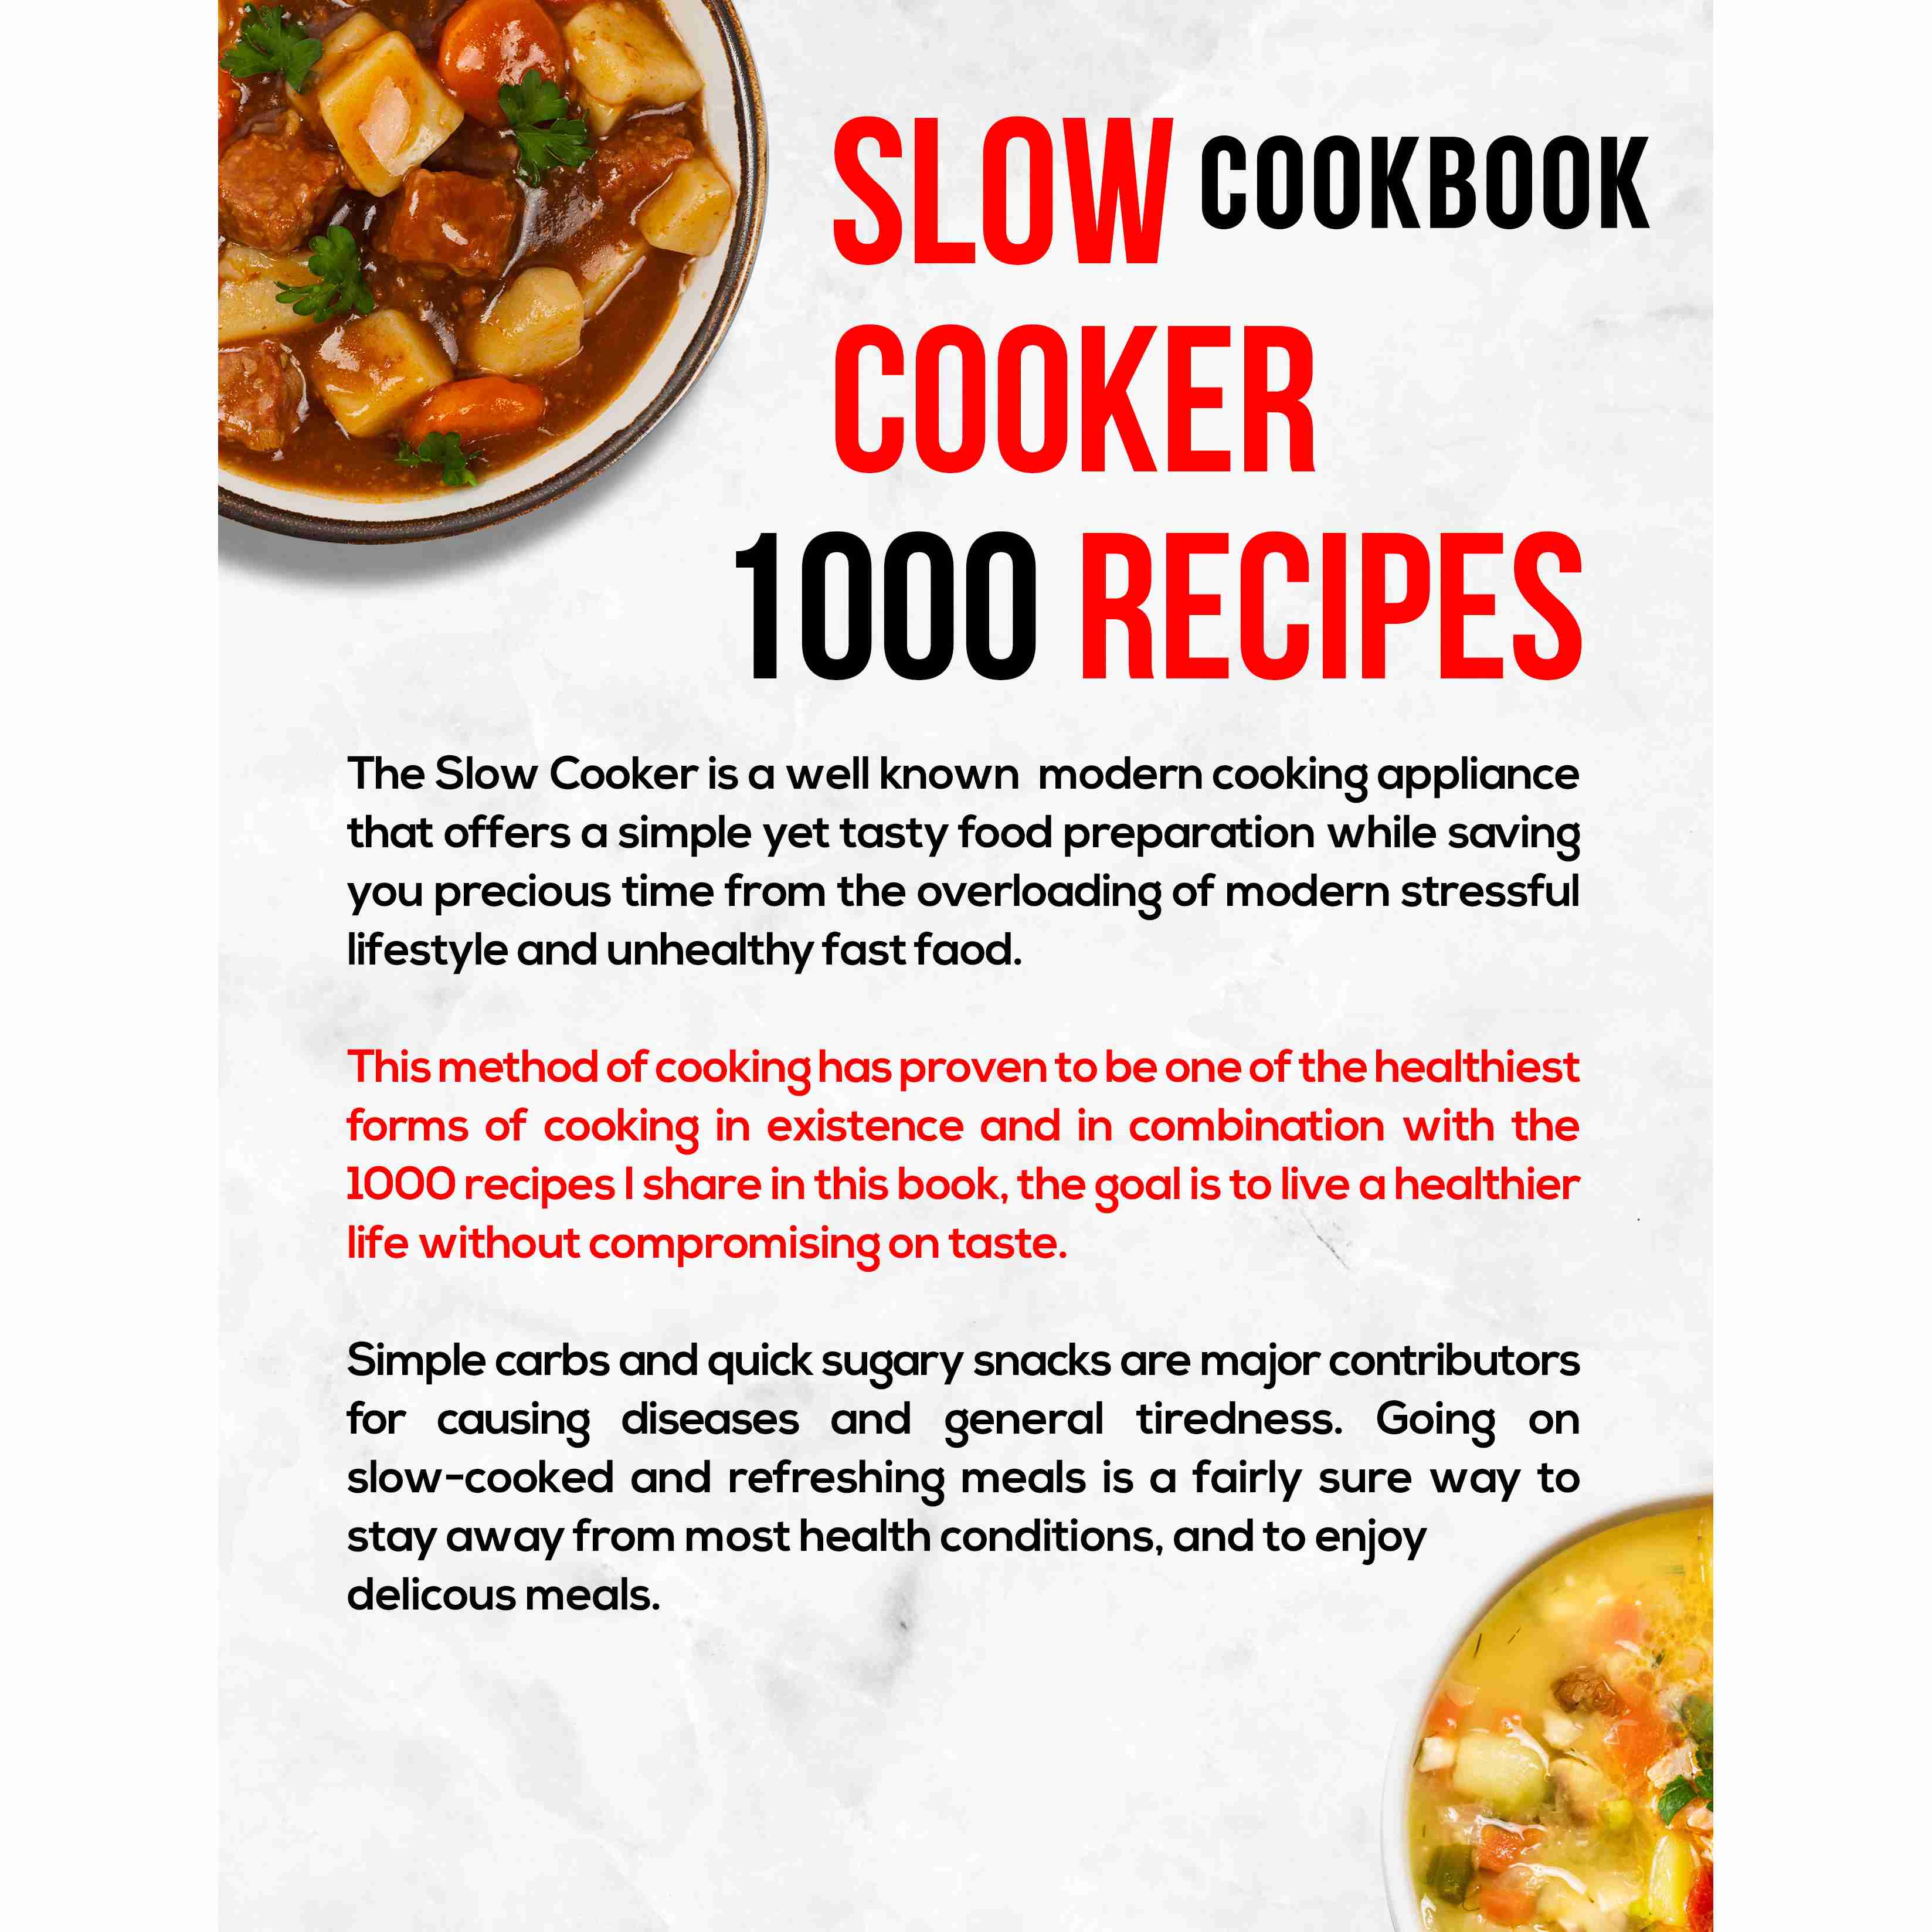 slow-cooker-cookbook-patrick-jones for cheap